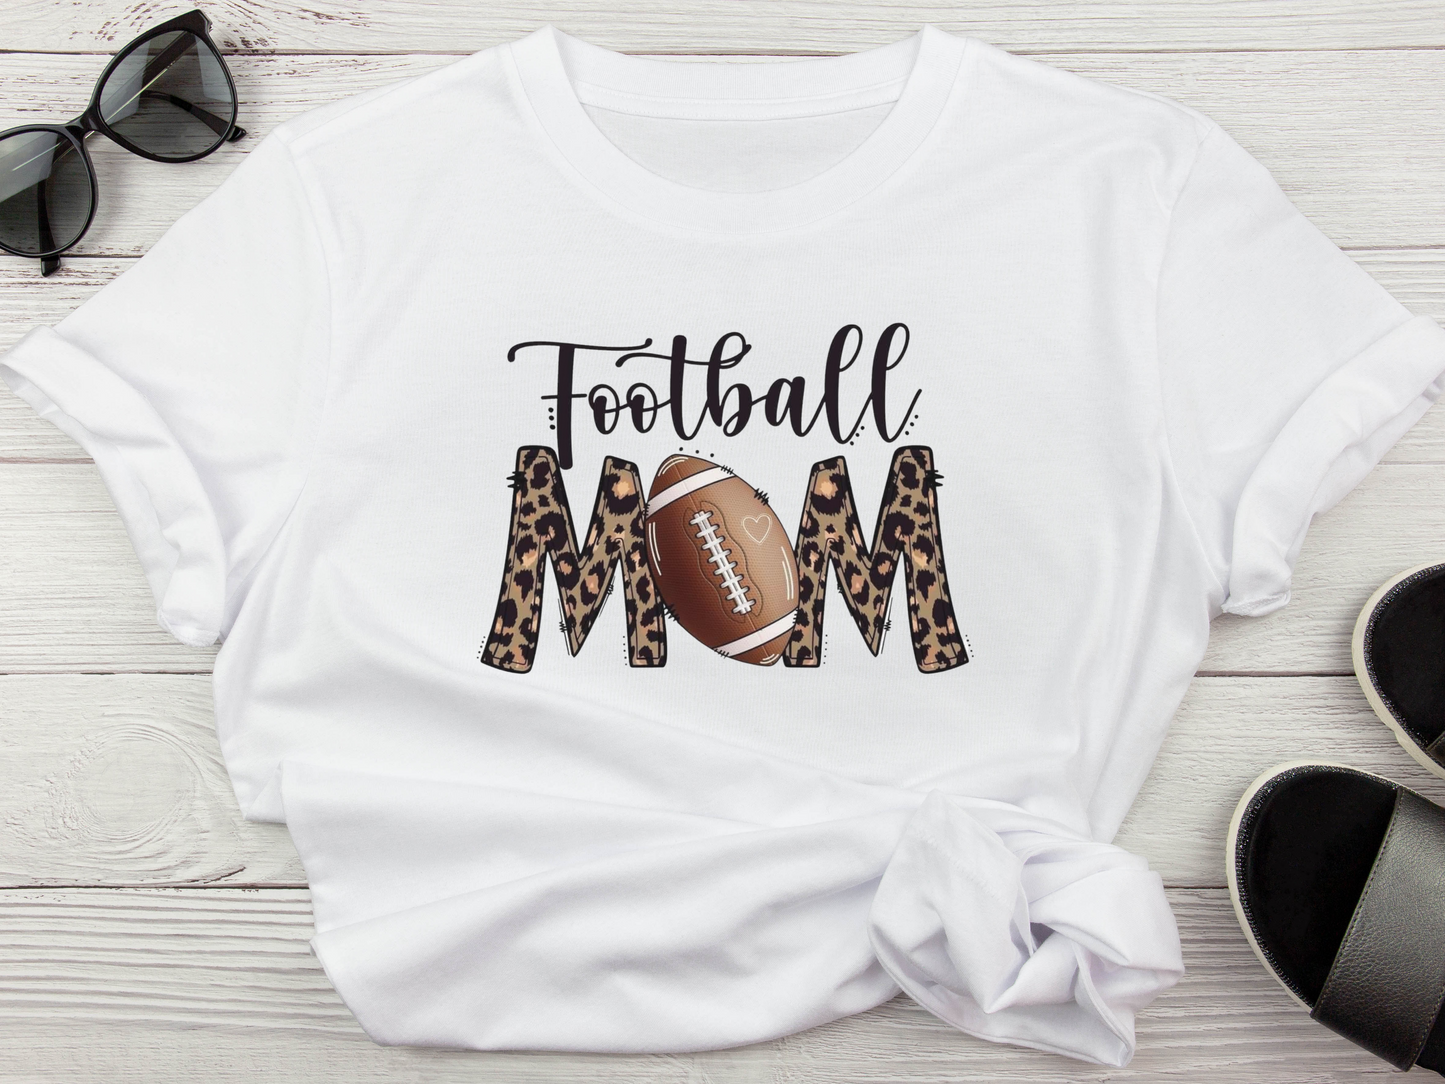 Football MOM football fan t-shirt with leopard